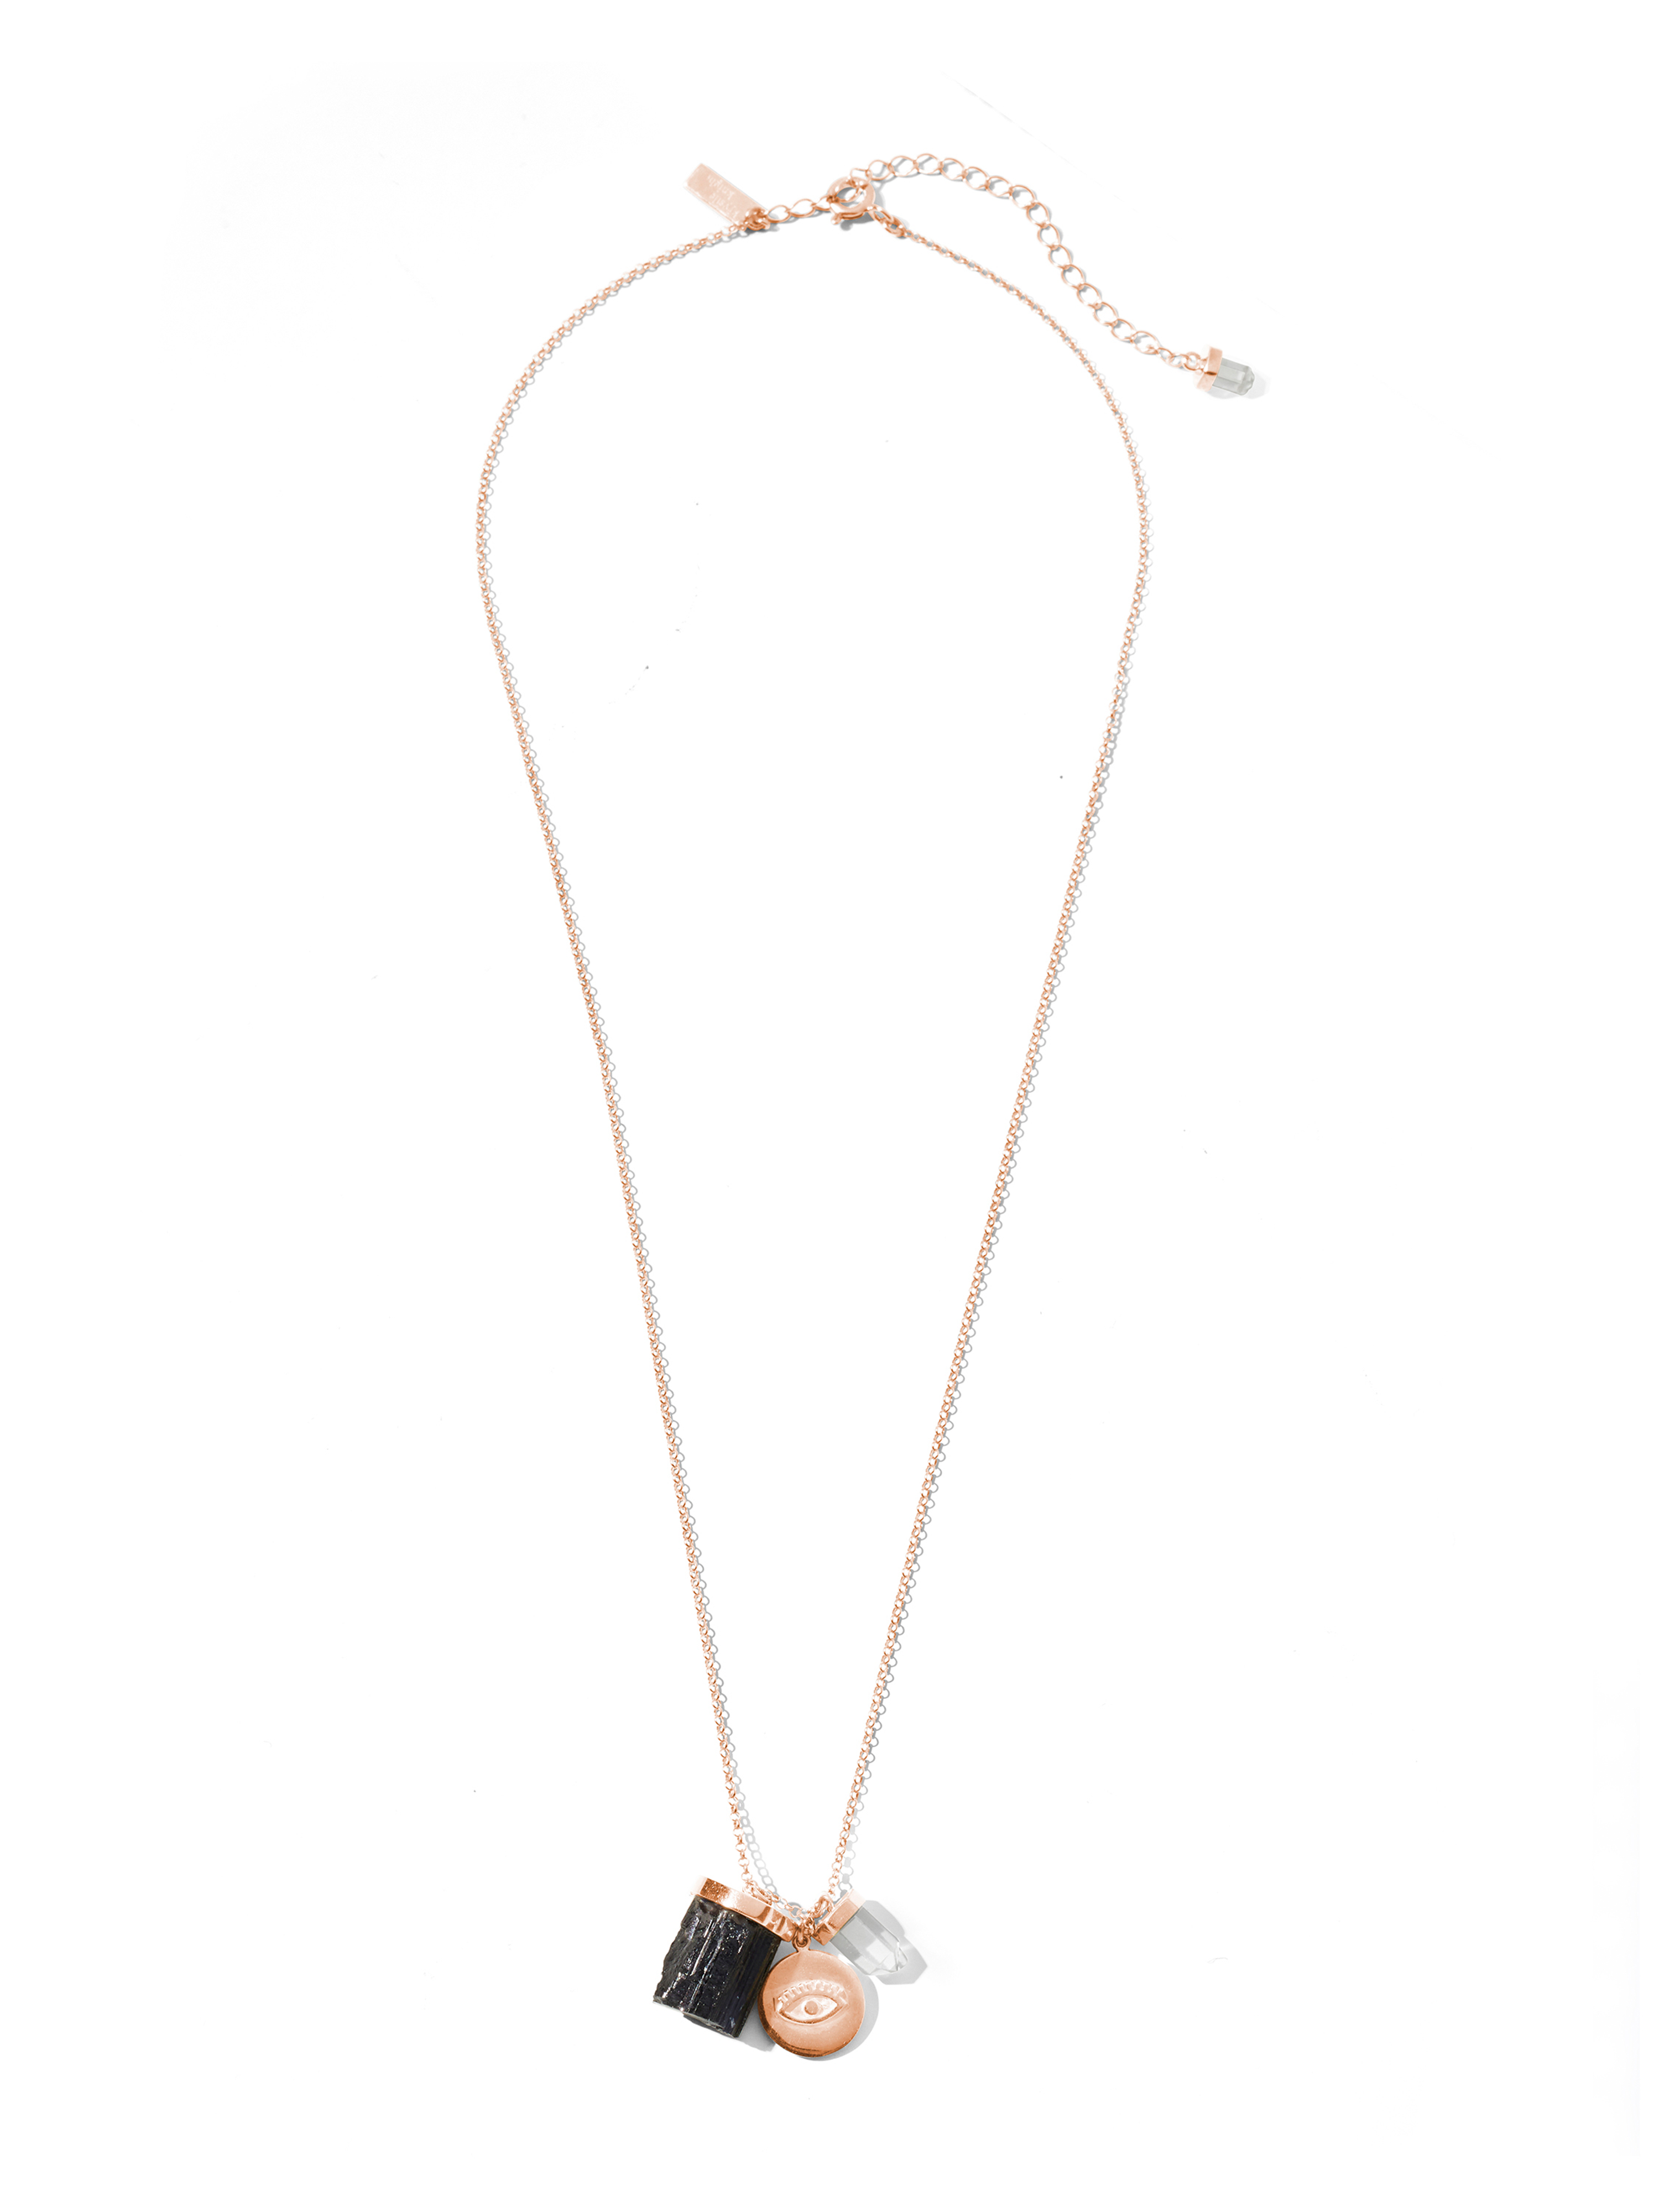 HAIJUNSM Natural Black Tourmaline Stone Necklace Crystal Pendant DIY Crafts  Original Stone Ore Specimen Fashion Jewelry Gift For Friend (Color : Black)  : Amazon.co.uk: Health & Personal Care